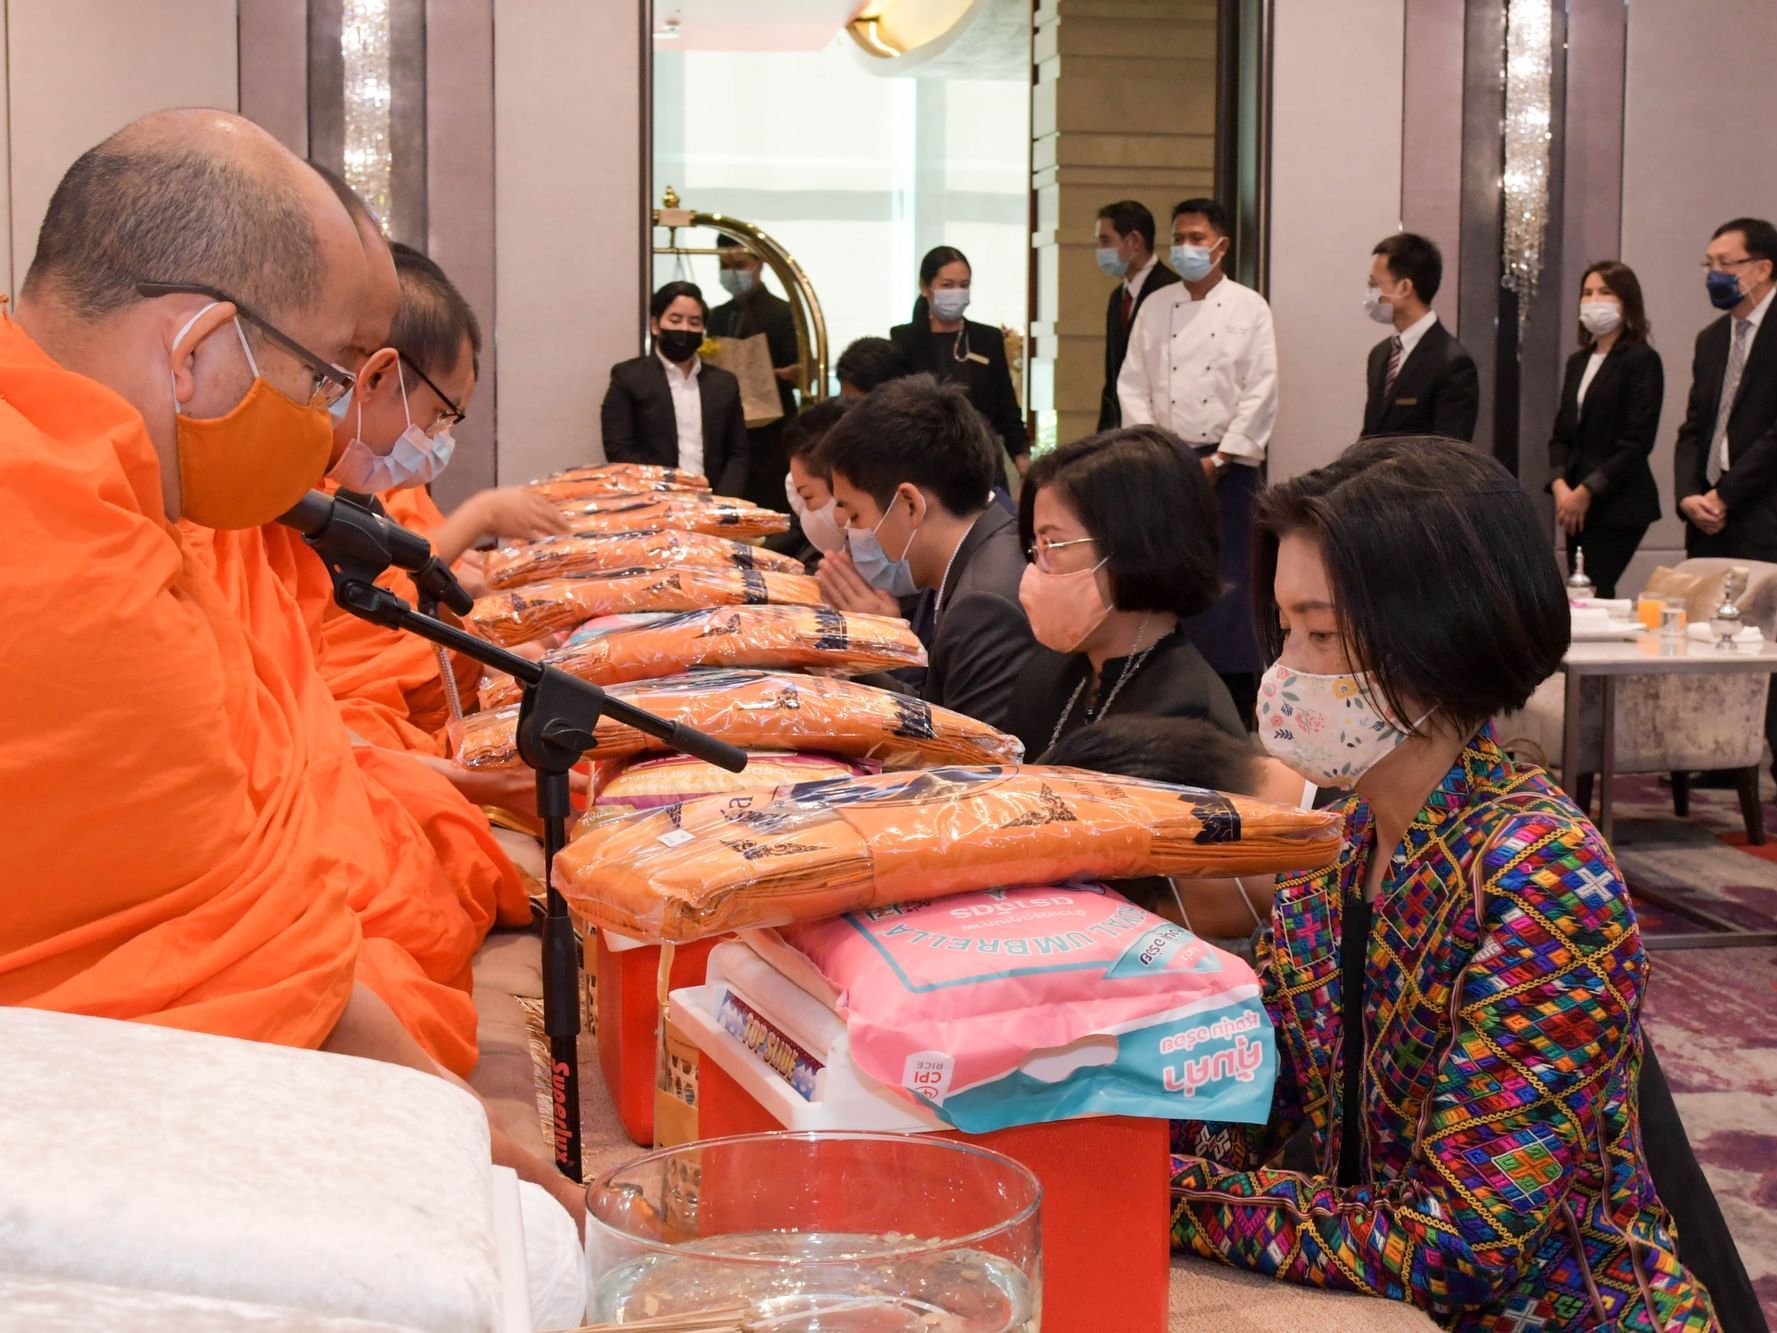 Buddist ceremony for 12th anniversary at Chatrium Hotel Bangkok